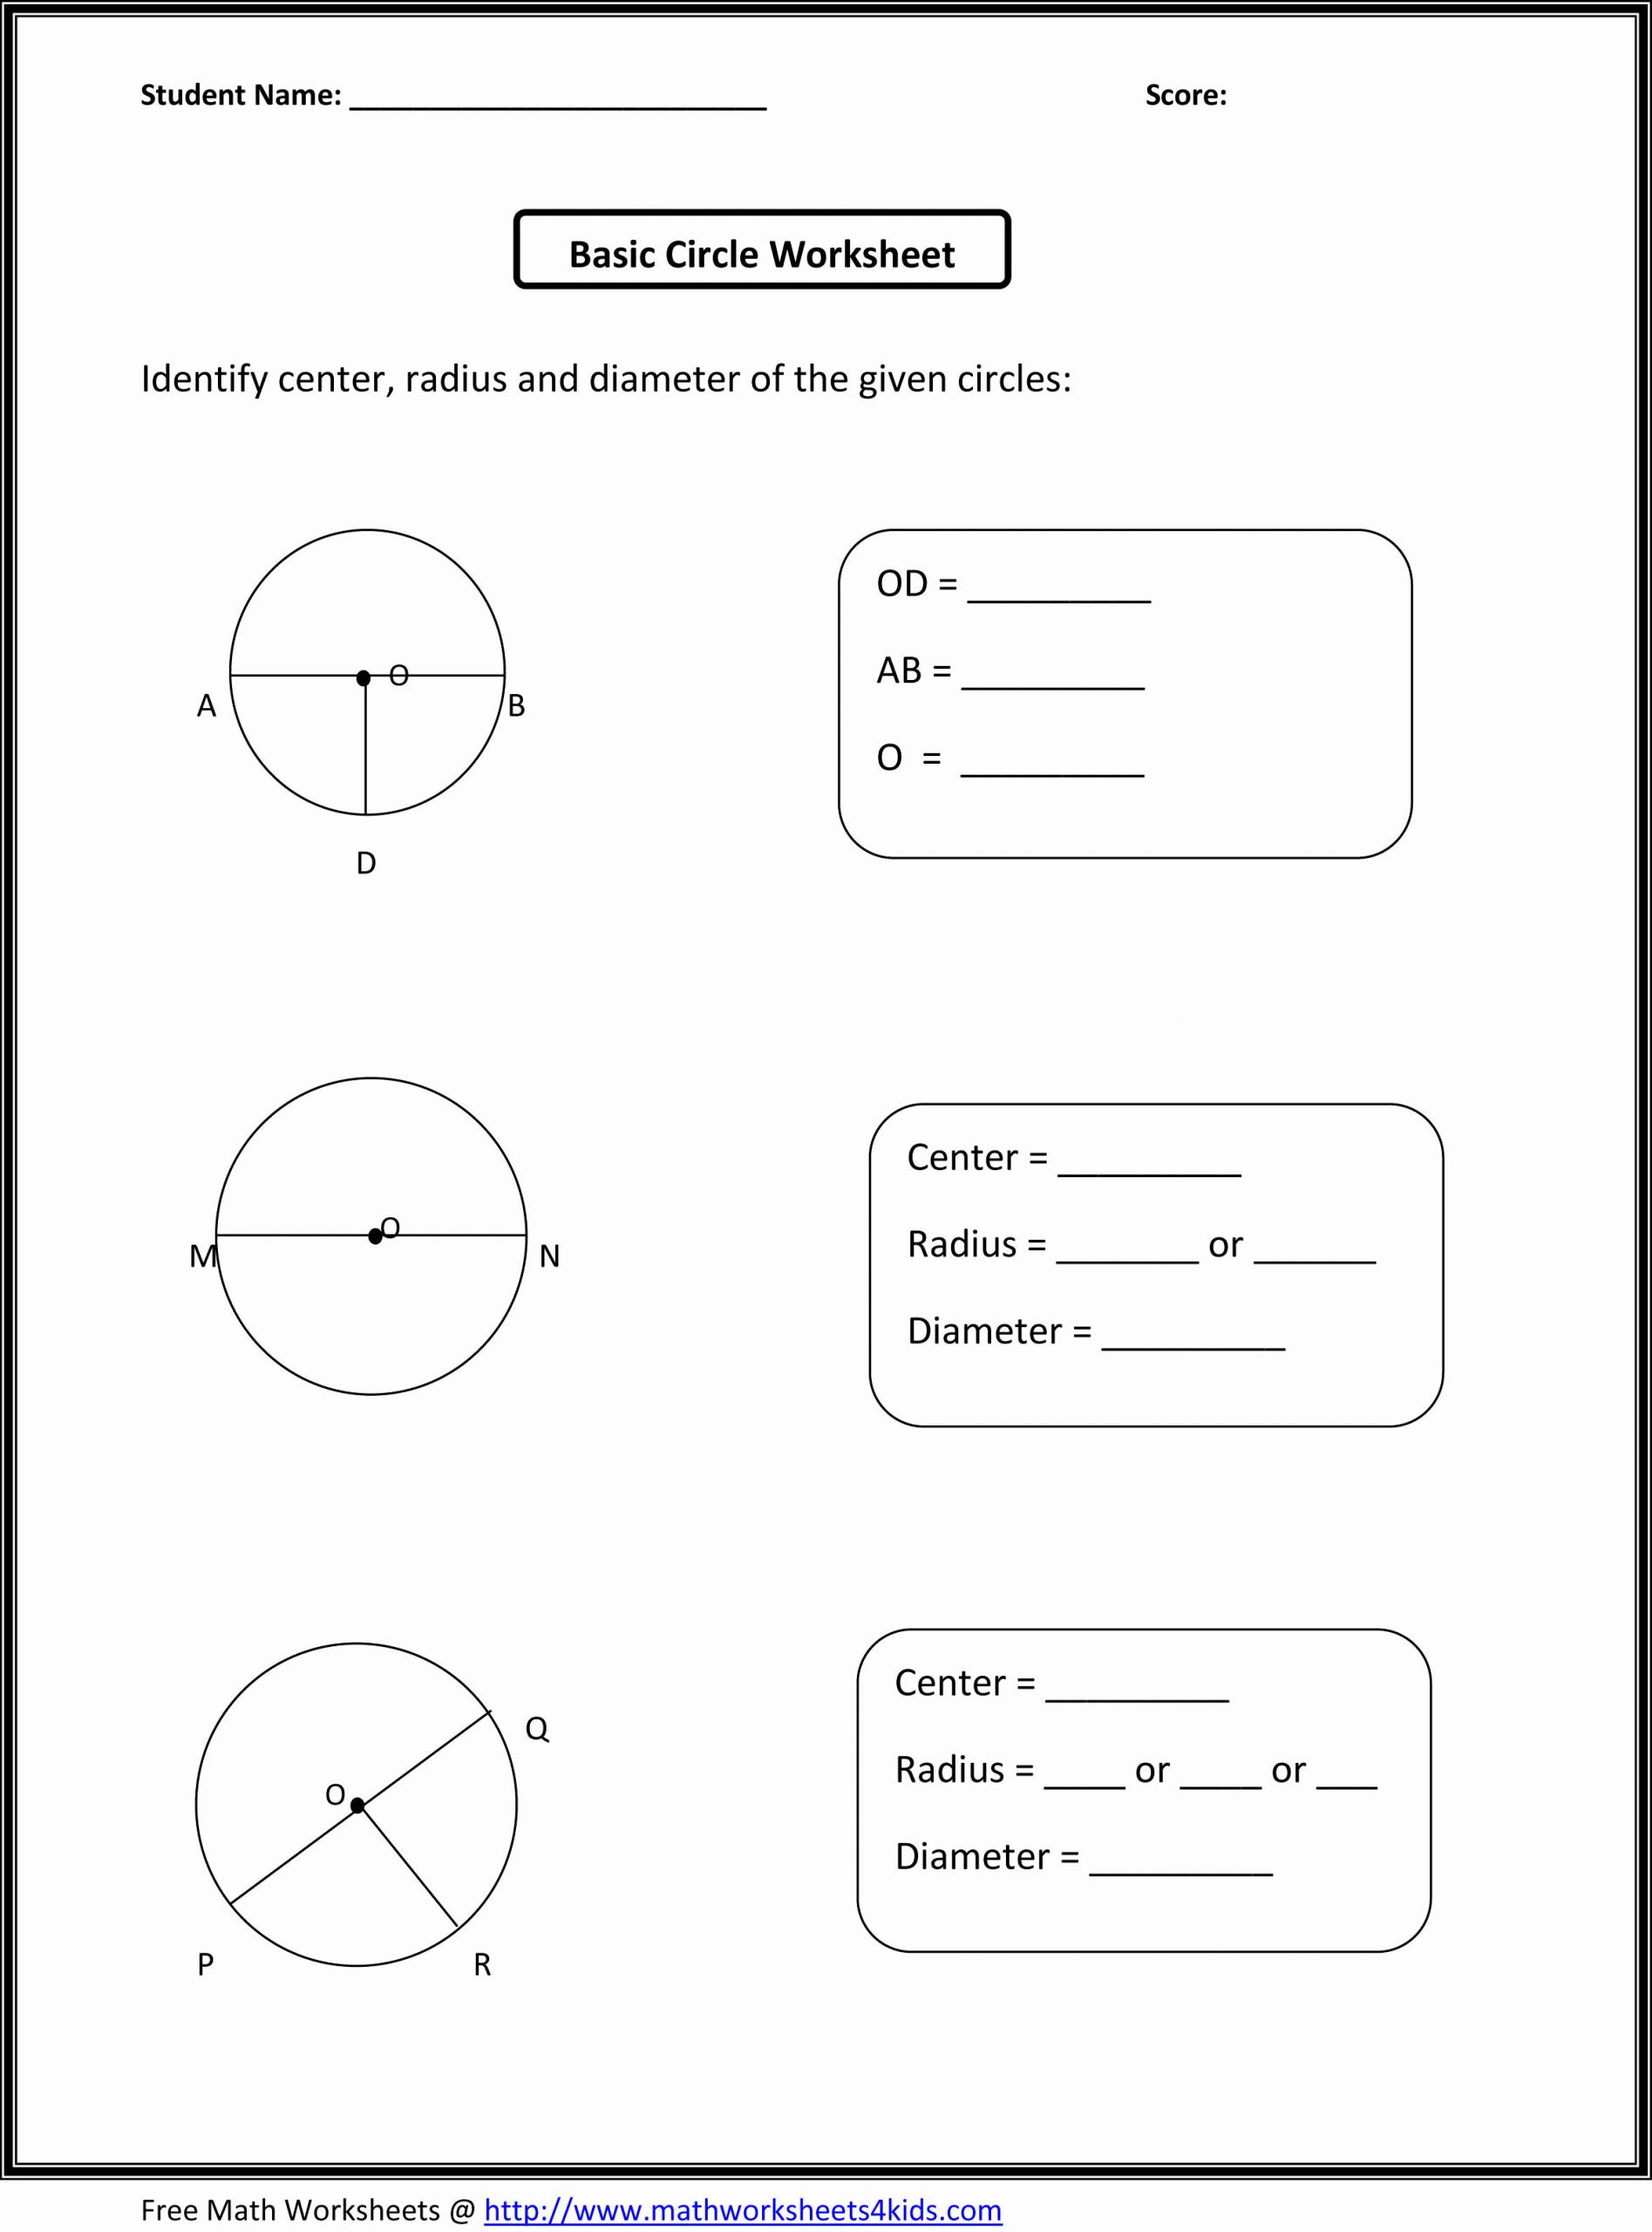 Free Math Worksheets Third Grade 3 Measurement Metric Units Mass Kg Gm